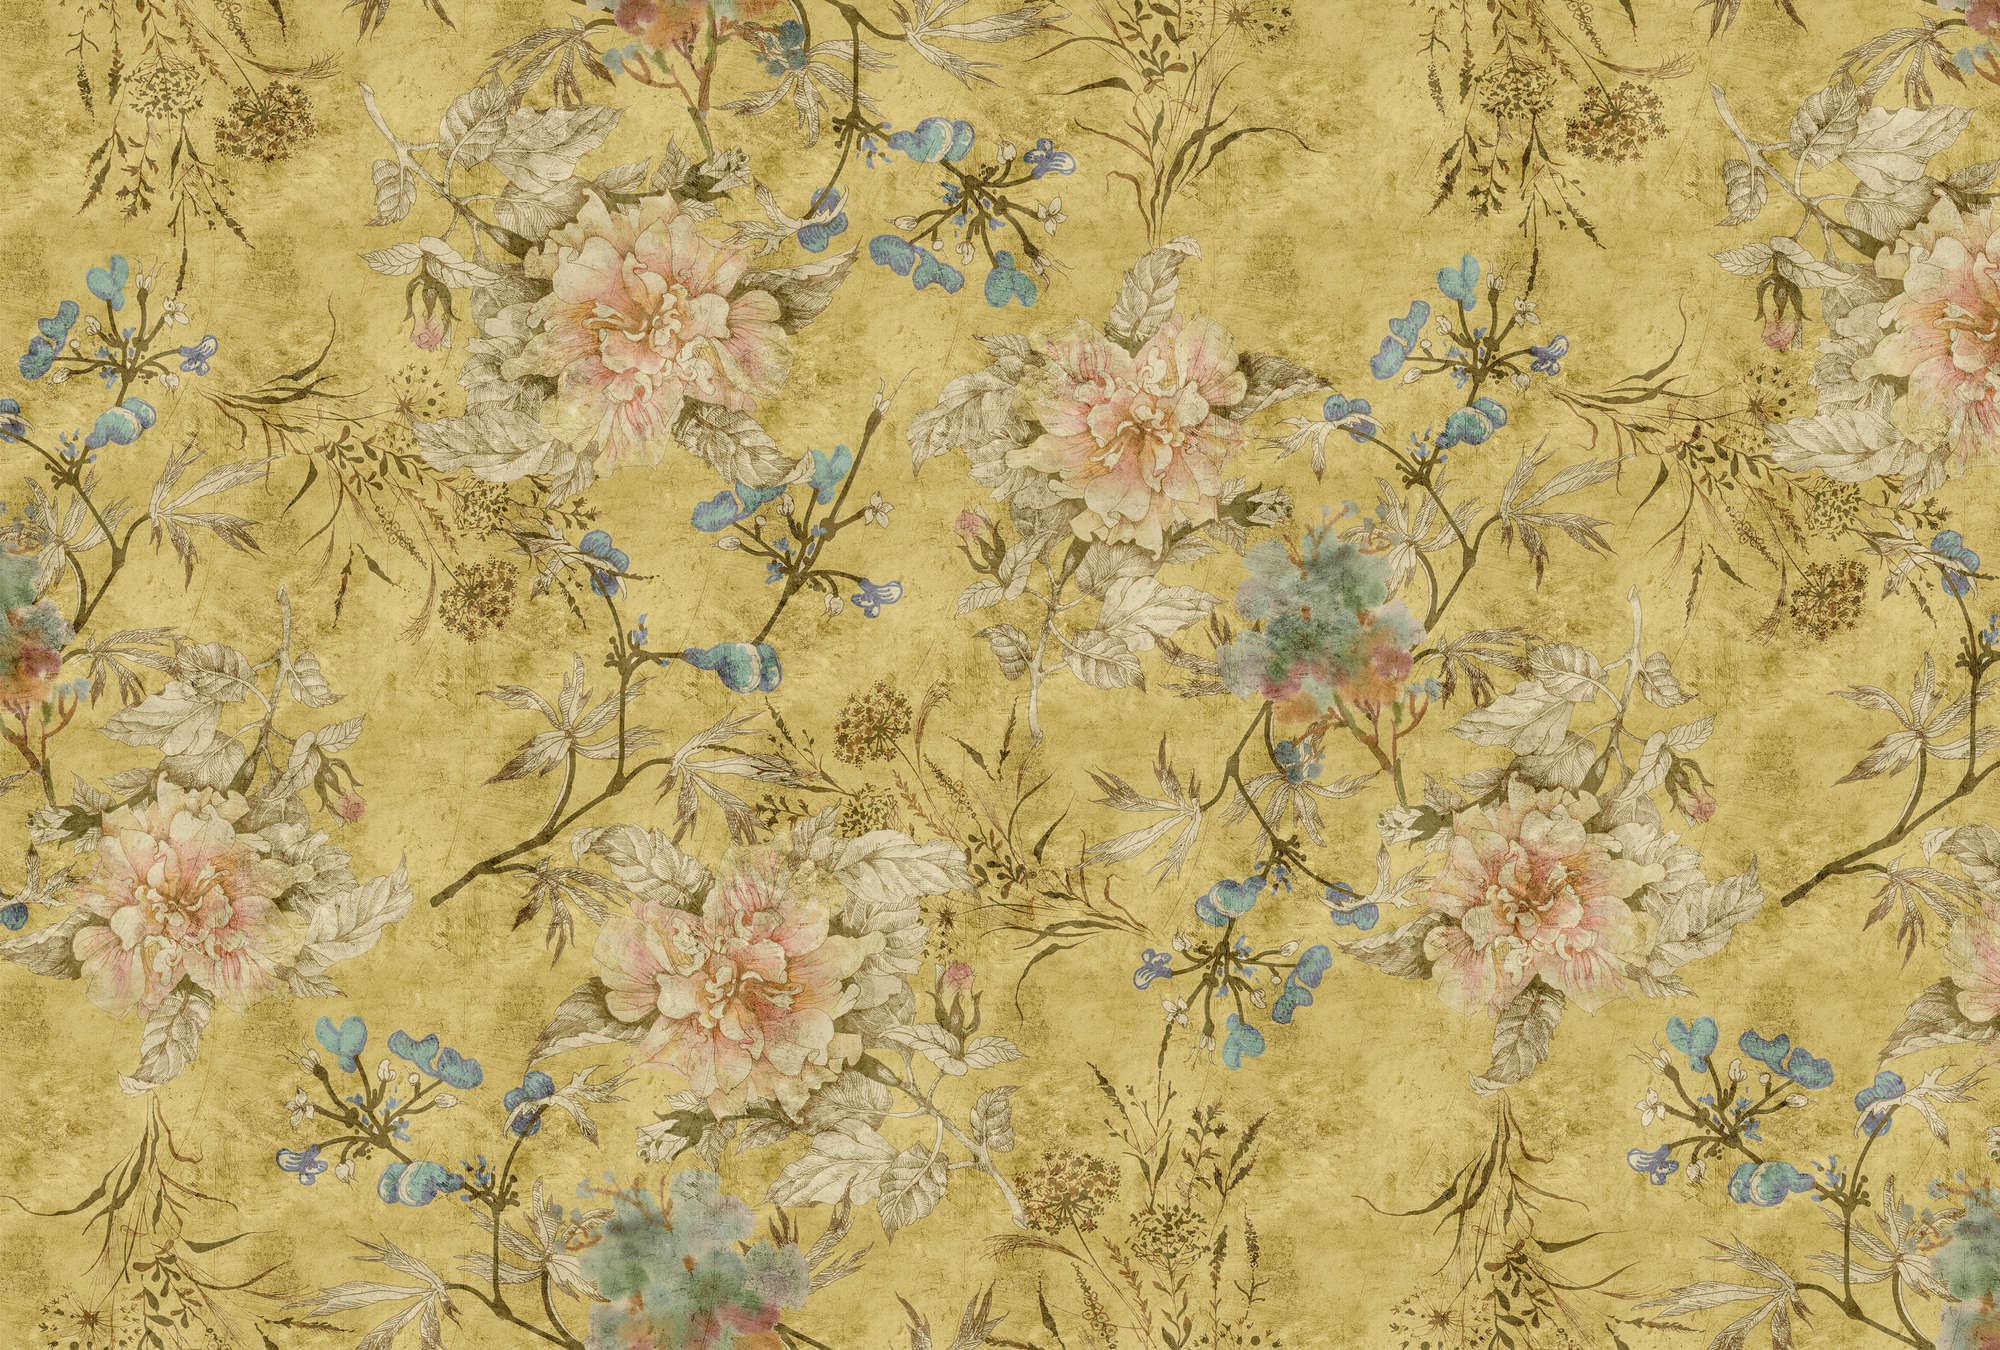             Tenderblossom 2 - Papel Pintado Floral Vintage - Textura Raspada - Amarillo | Liso Perlado
        